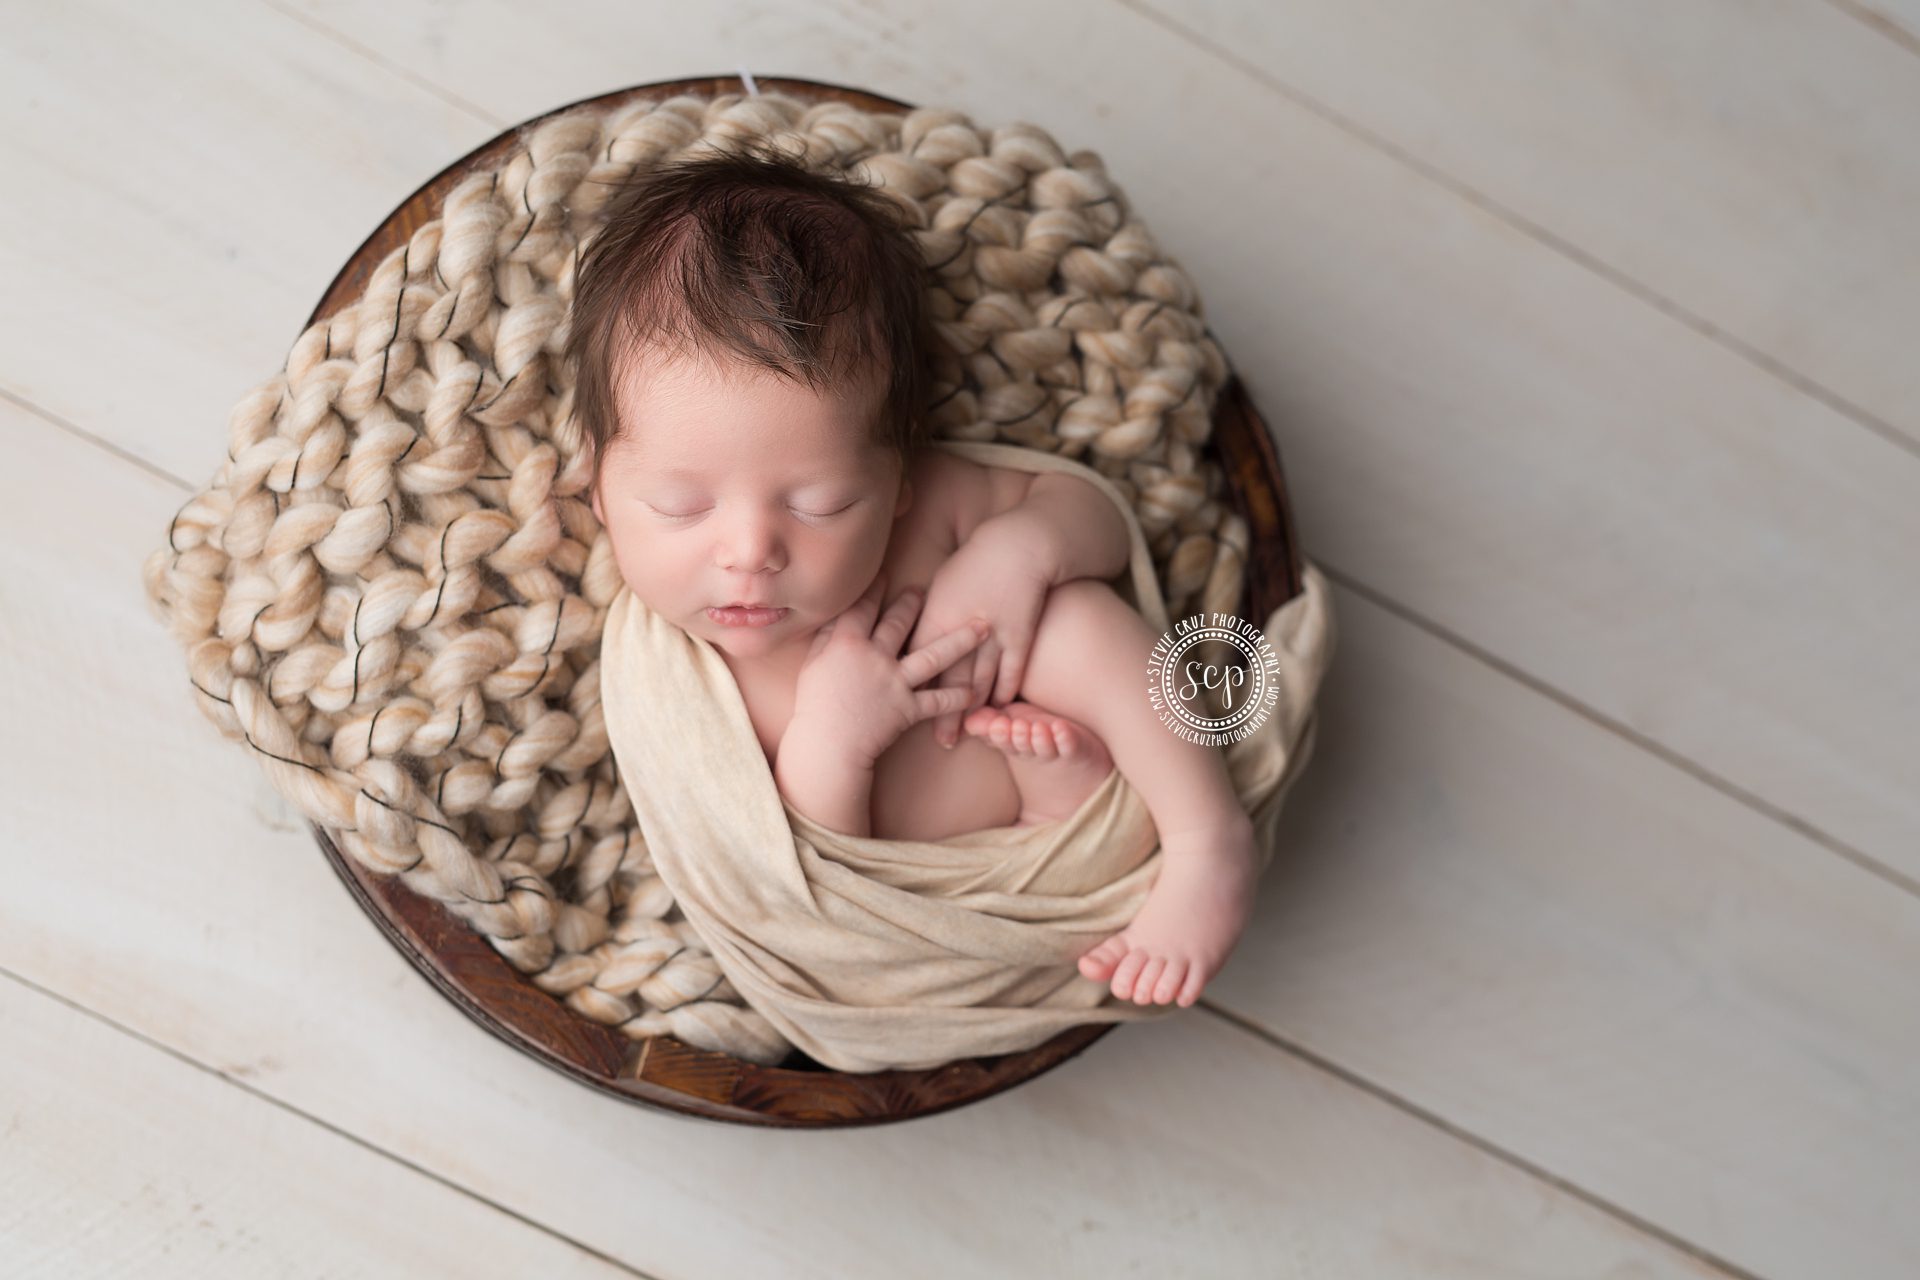 picture of baby newborn boy sleeping wrapped in garments - cute newborn photo